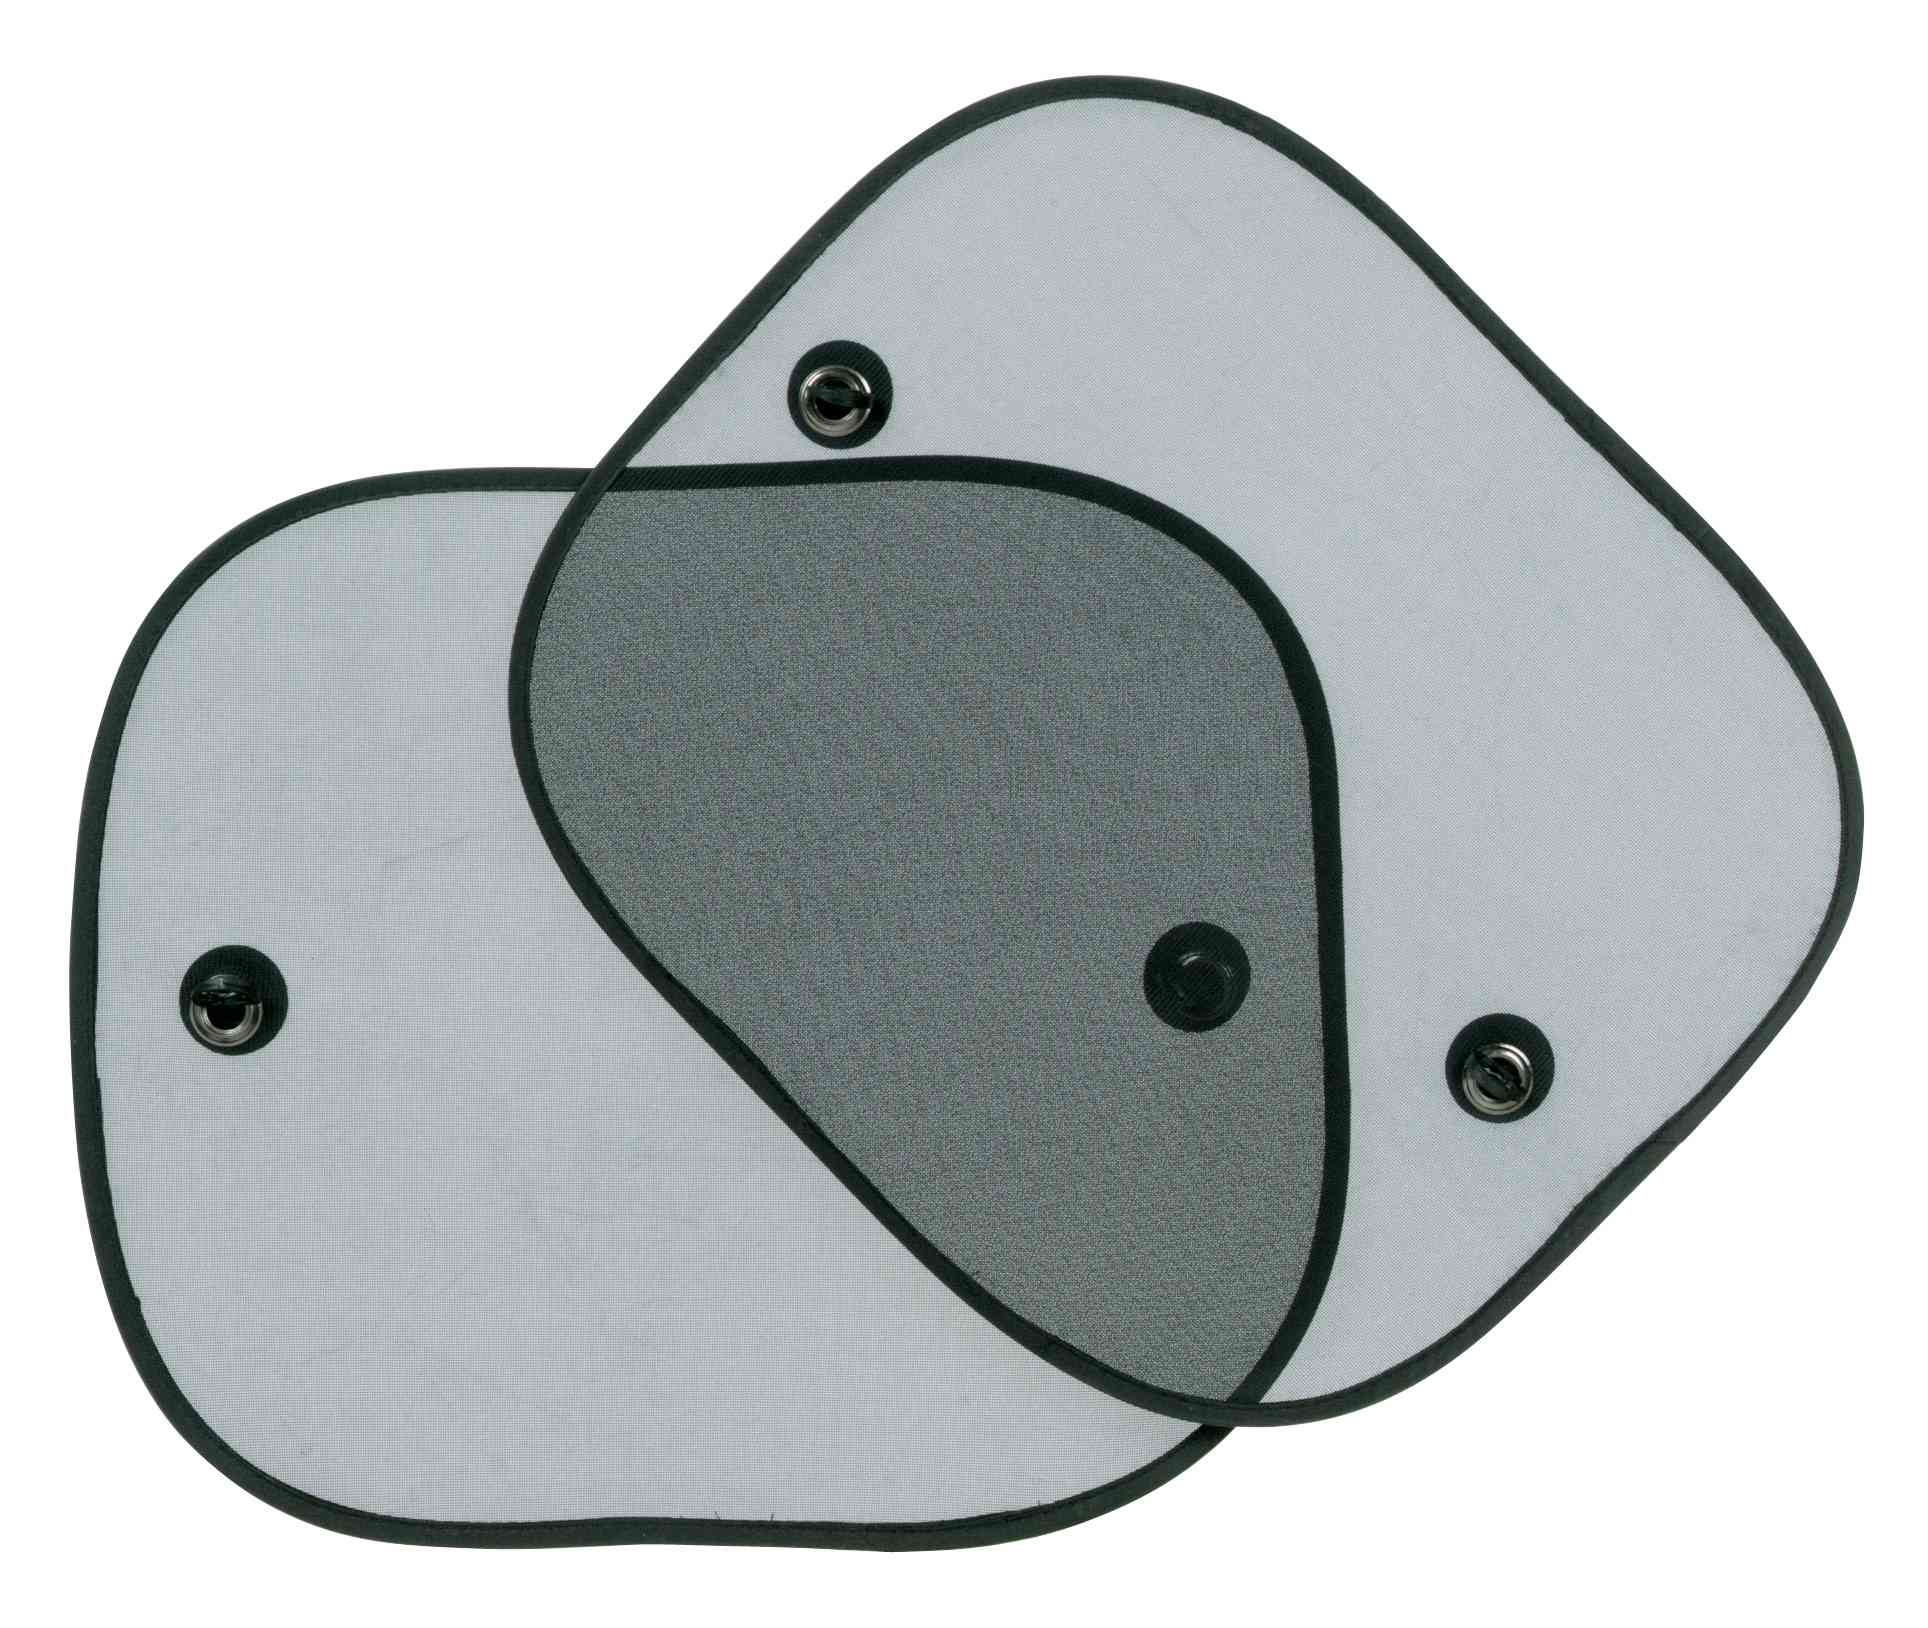 100 piezas de cartera magnética ultra fina cartera magnética coser en  botones magnéticos broches de presión bolsa magnética cierre magnético  ultra